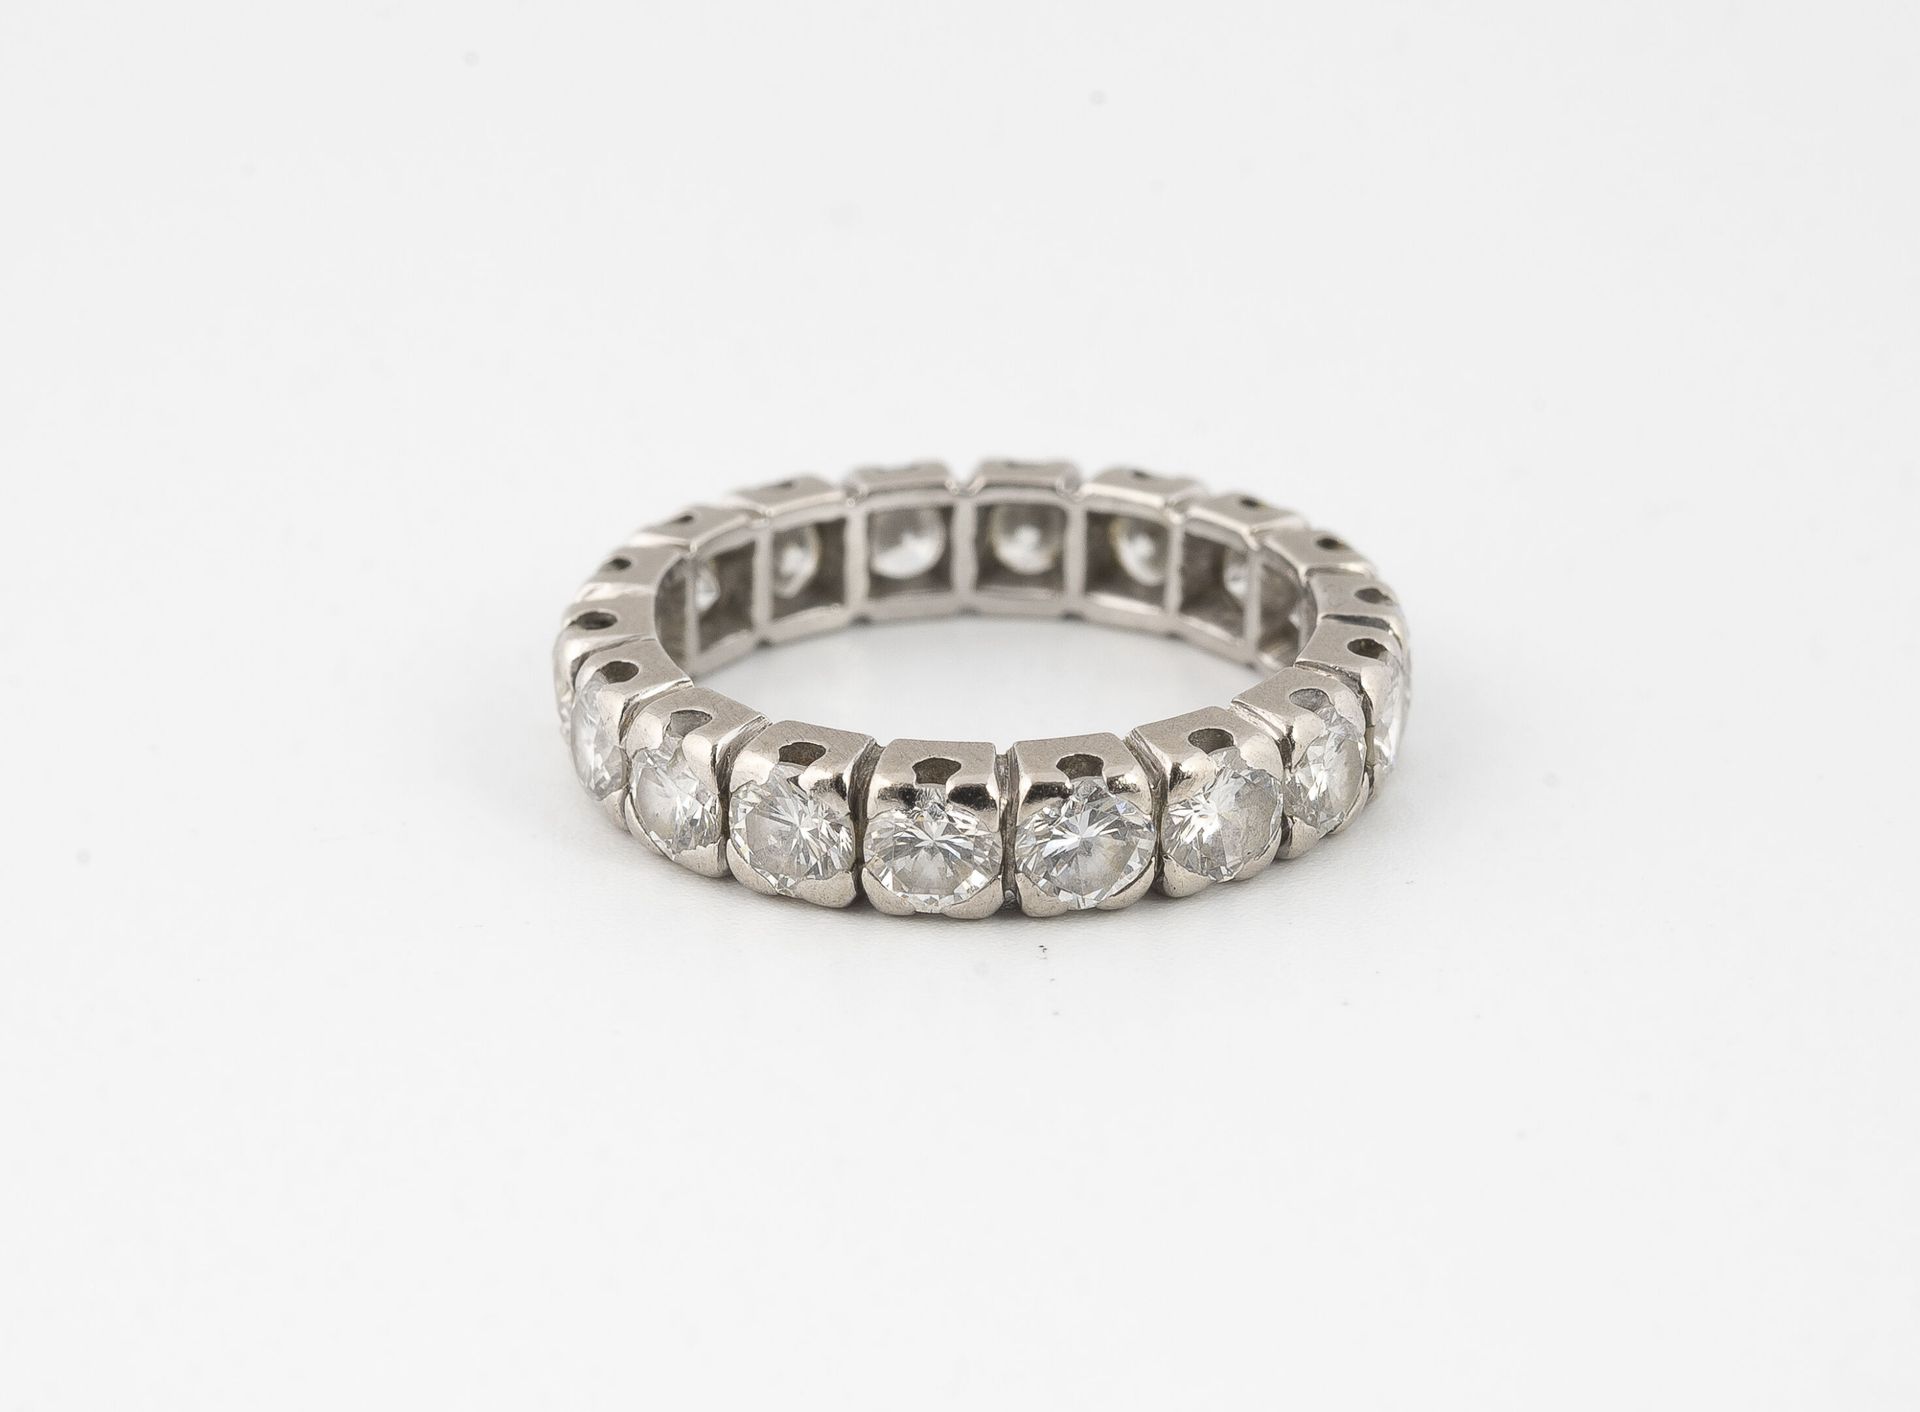 Null 美国结婚戒指，白金（750），镶嵌明亮式切割钻石。

毛重：3.4克 - 手指大小：48。 

刮伤和擦伤。